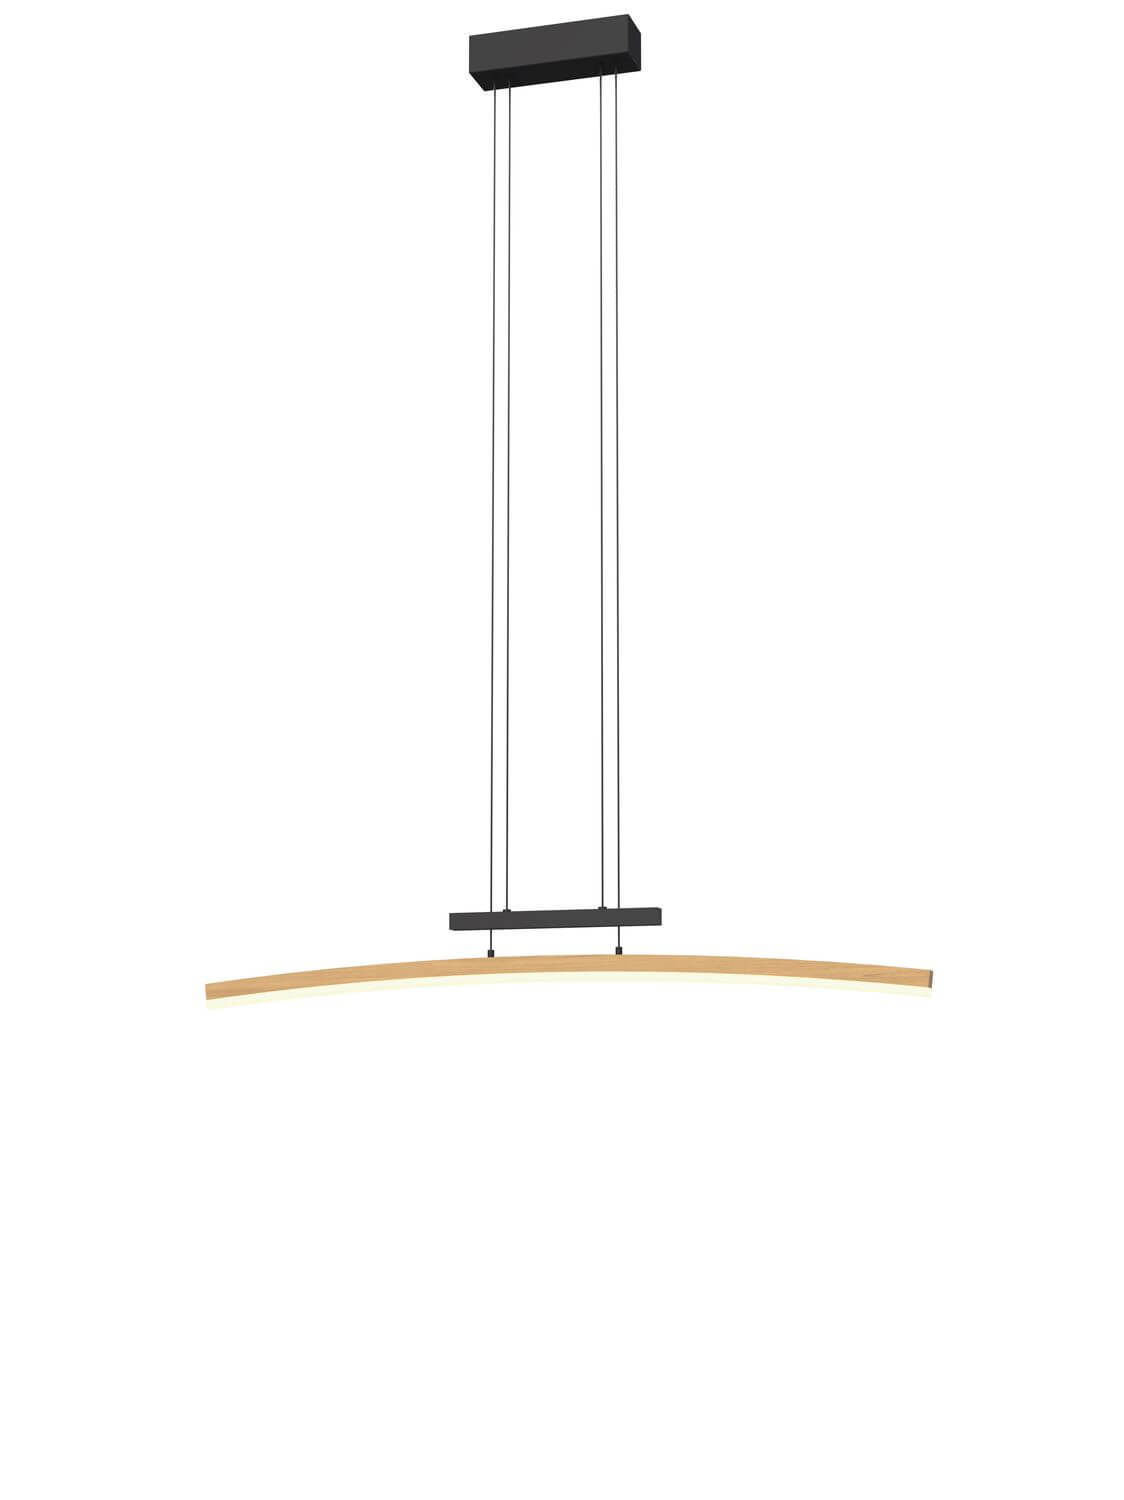 Wofi Bologna LED Pendelleuchte Schwarz-Holz 7020-106, 24W Warmweiss 3-Stufen